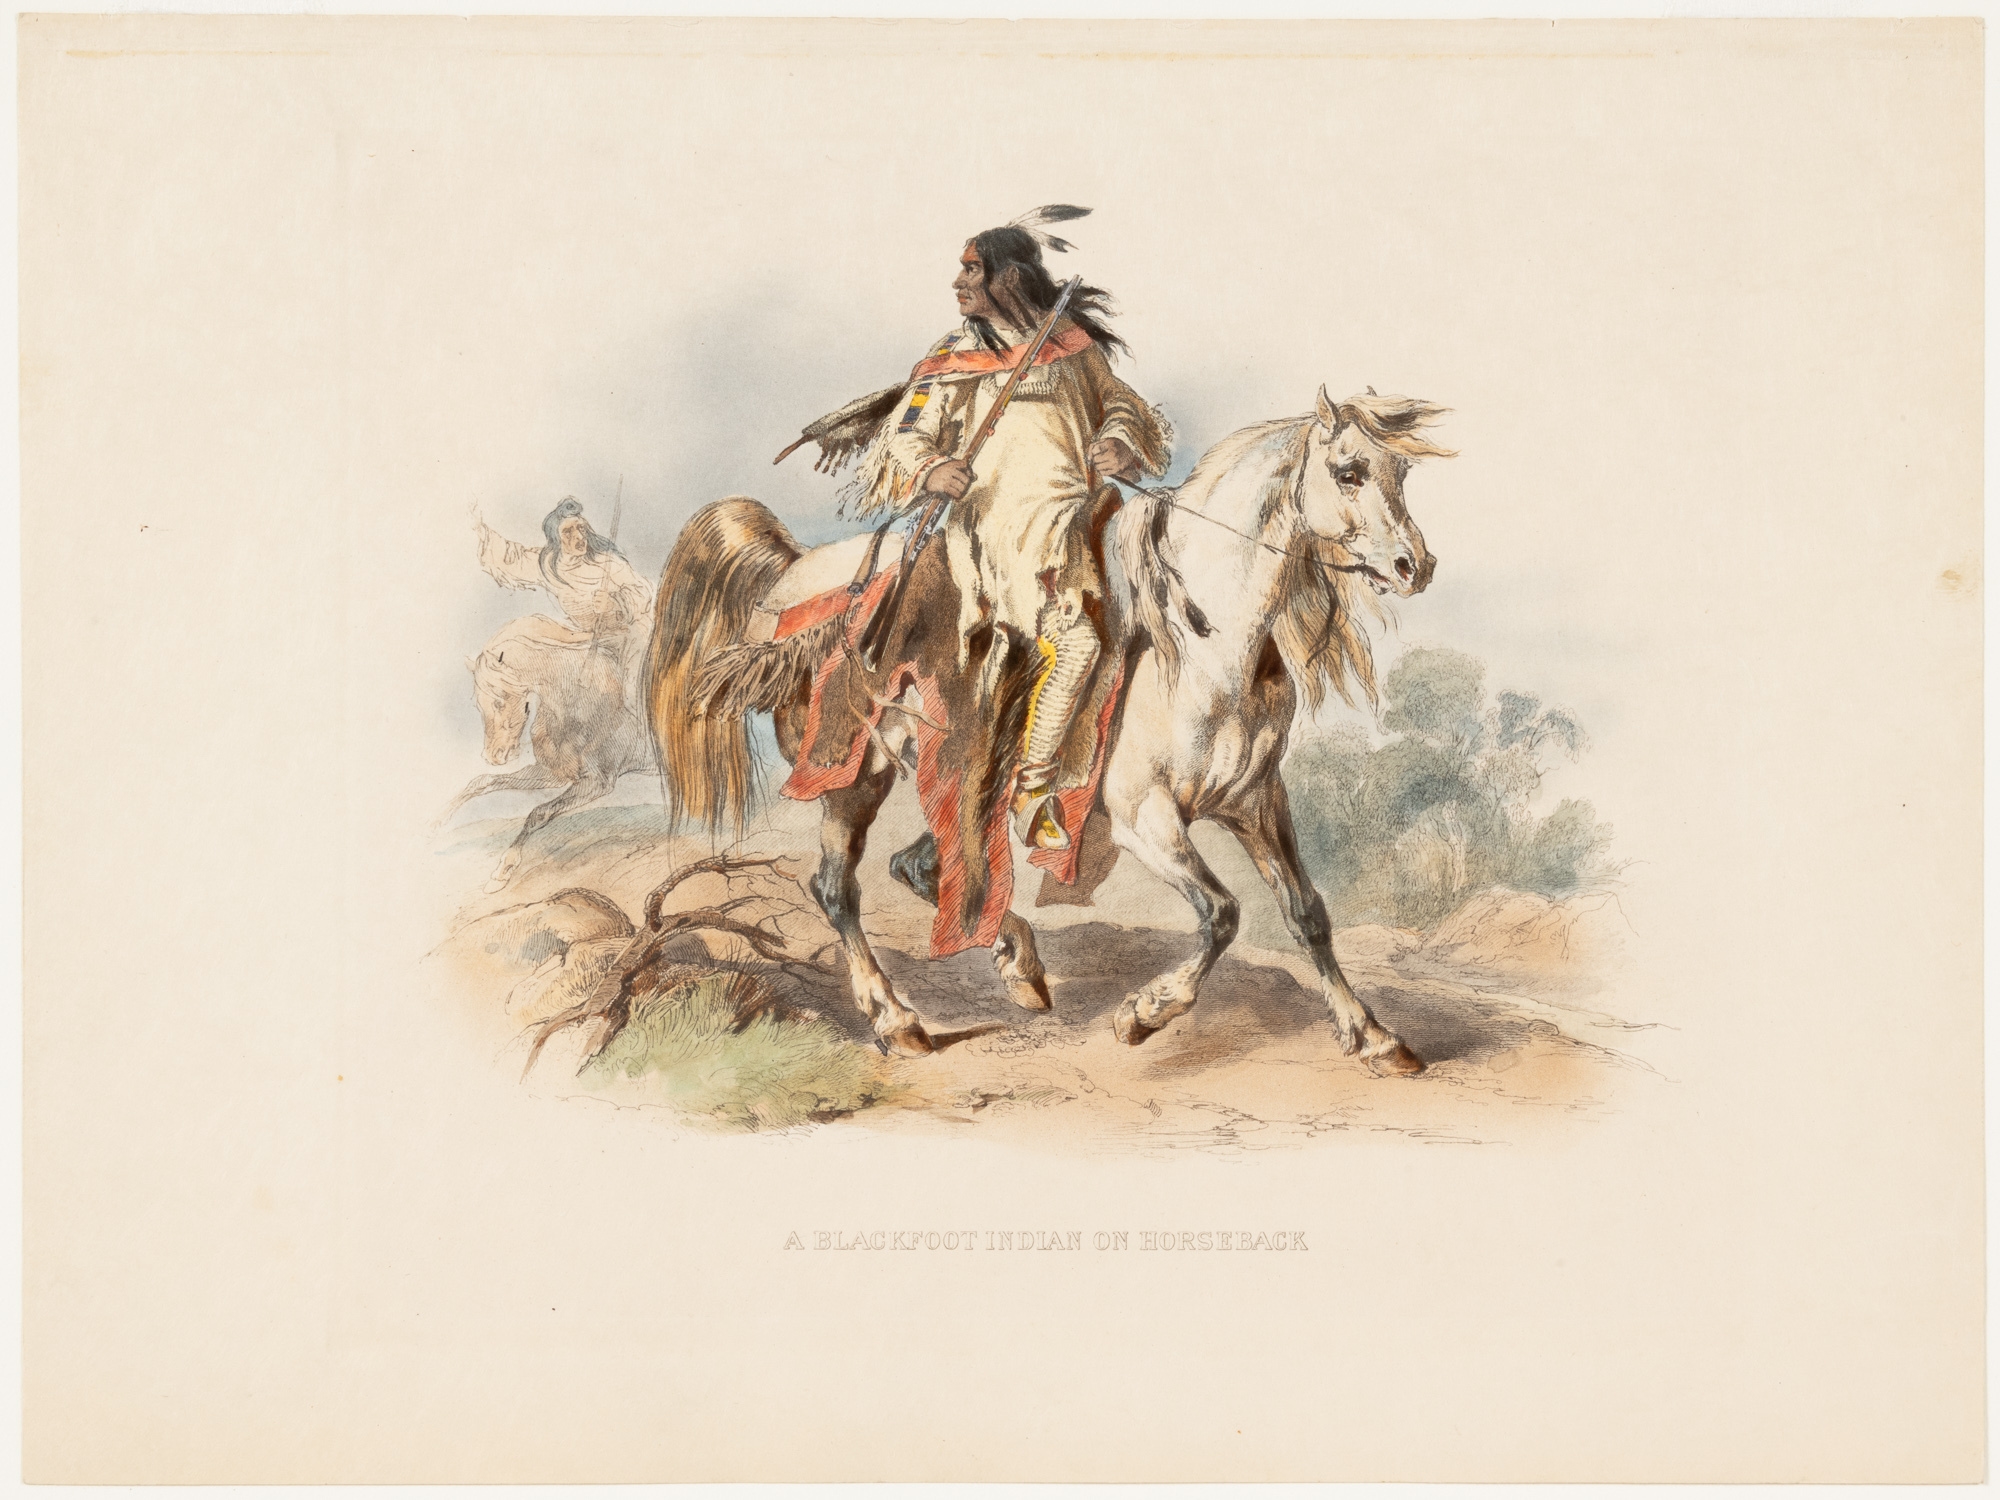 A Blackfoot Indian on Horseback by Karl Bodmer, 1839-1843